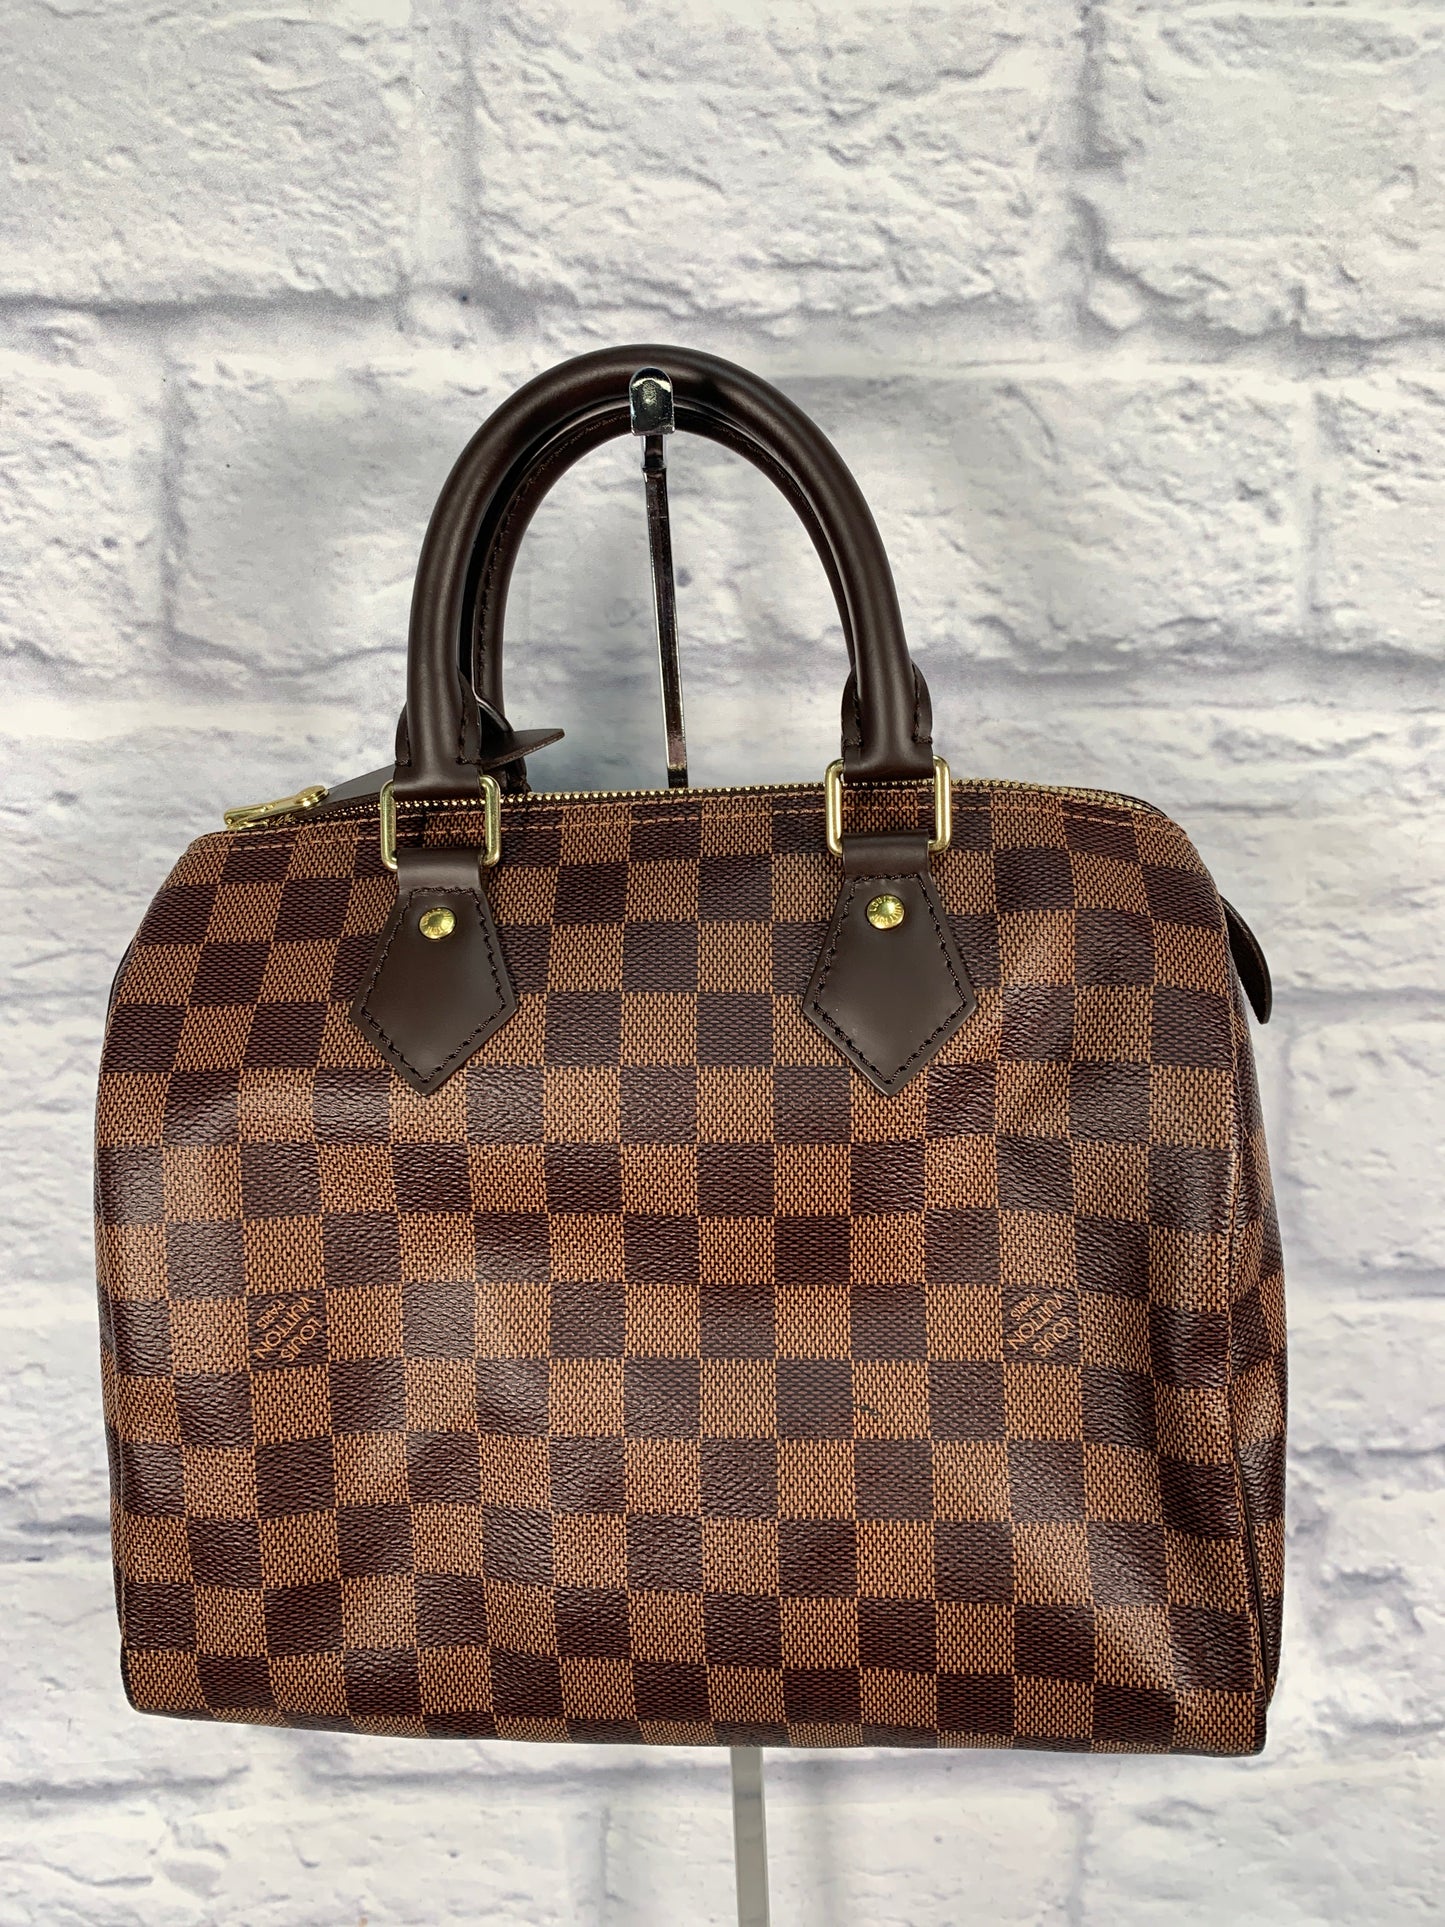 Handbag Luxury Designer Louis Vuitton, Size Small